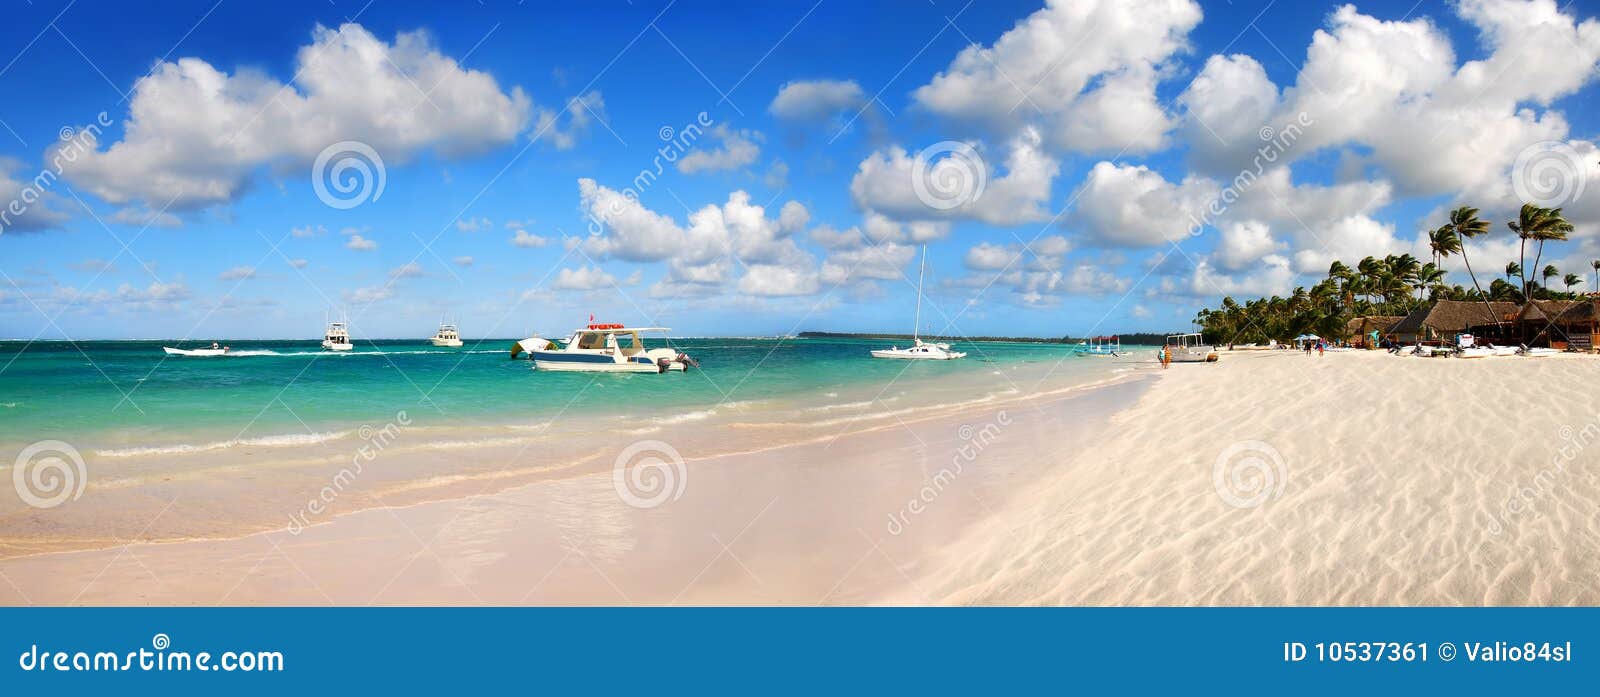 tropical white sand in dominican republic